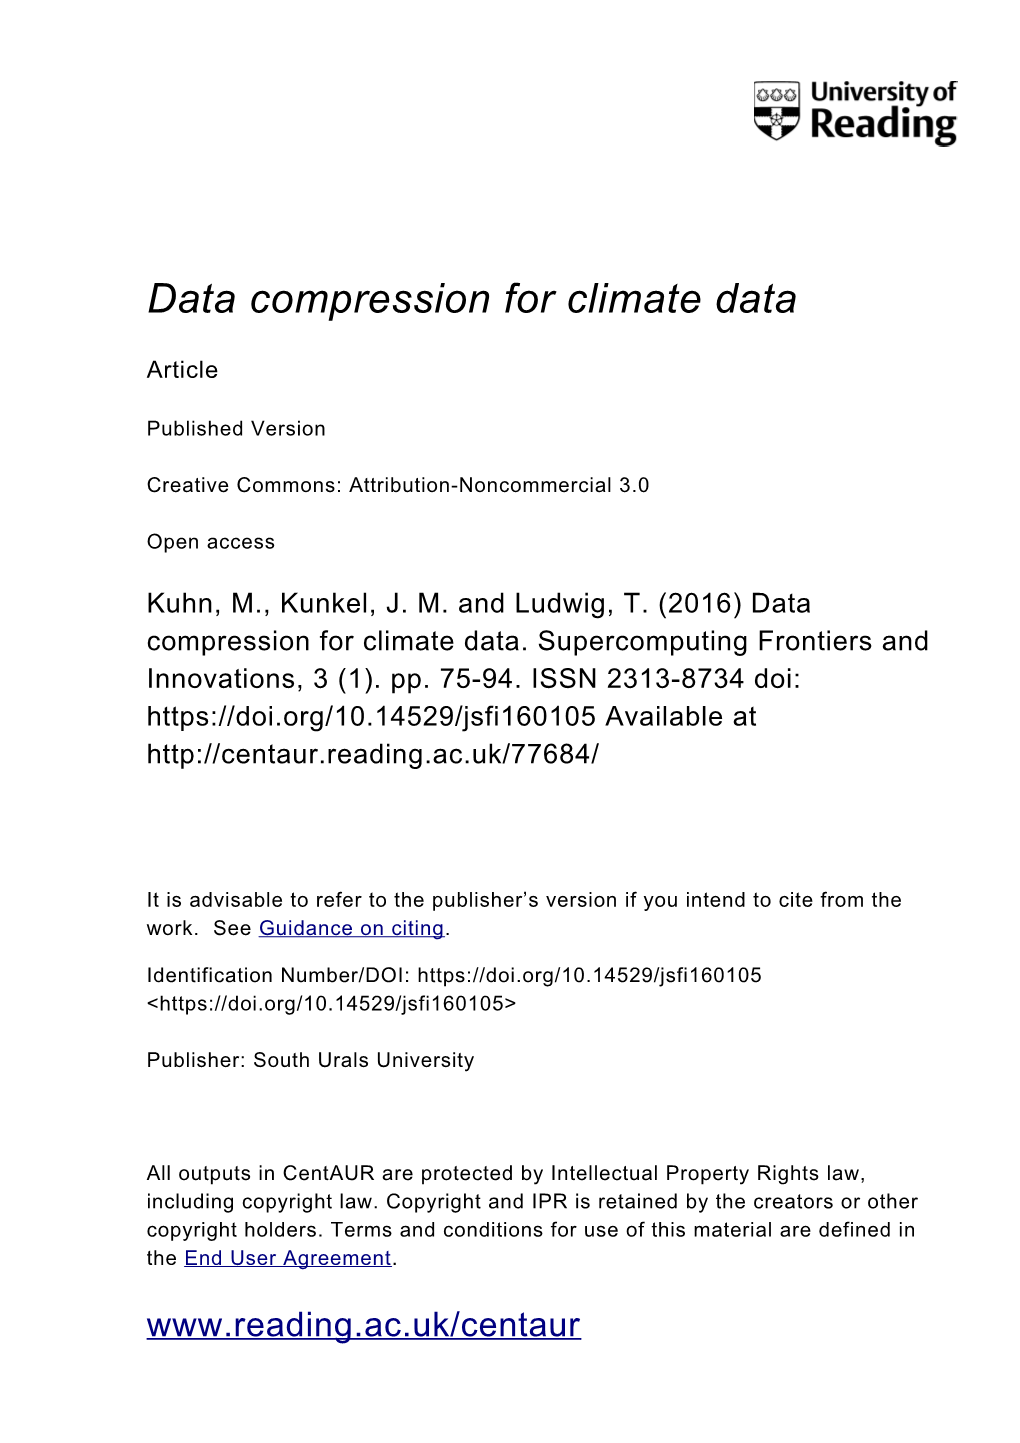 Data Compression for Climate Data